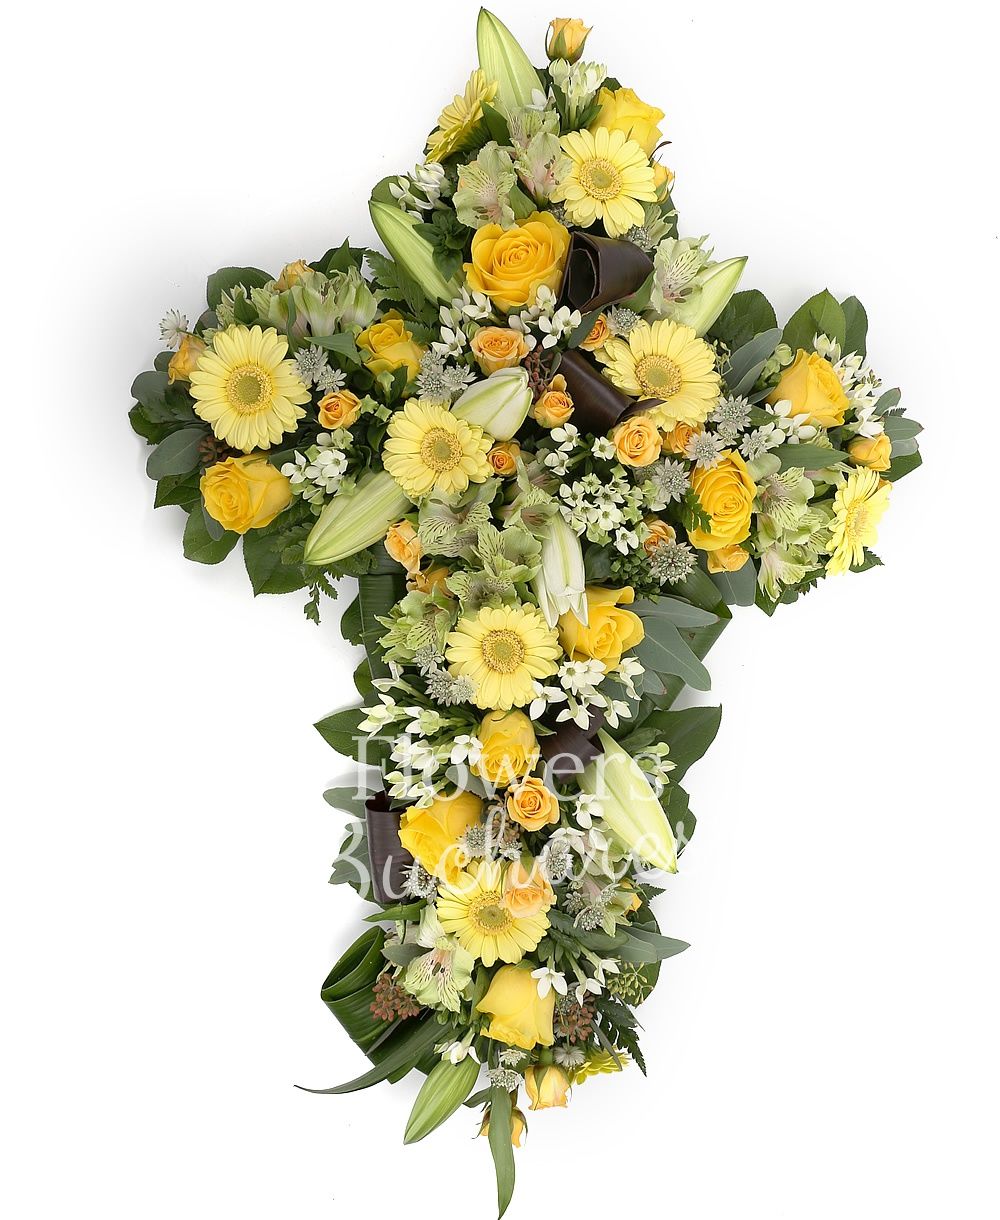 10 white bouvardia, 5 lilies, 10 yellow roses, 10 yellow miniroses, 5 white astranția, 10 yellow gerbera, 5 yellow alstroemeria, greenery